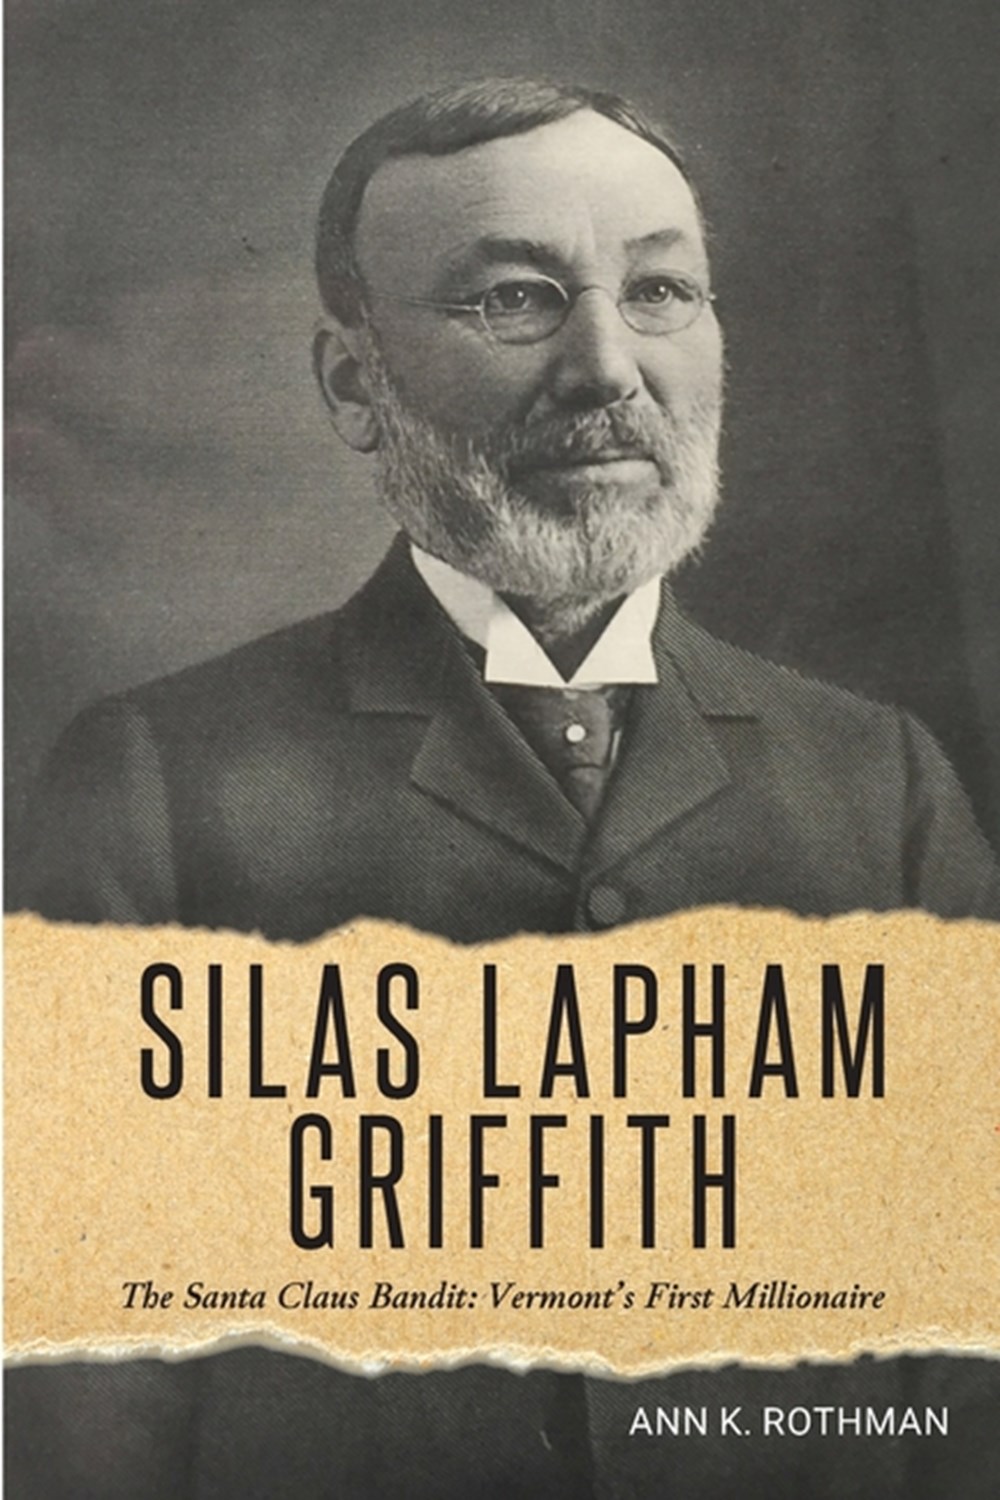 Silas Lapham Griffith: The Santa Claus Bandit: Vermont's First Millionaire